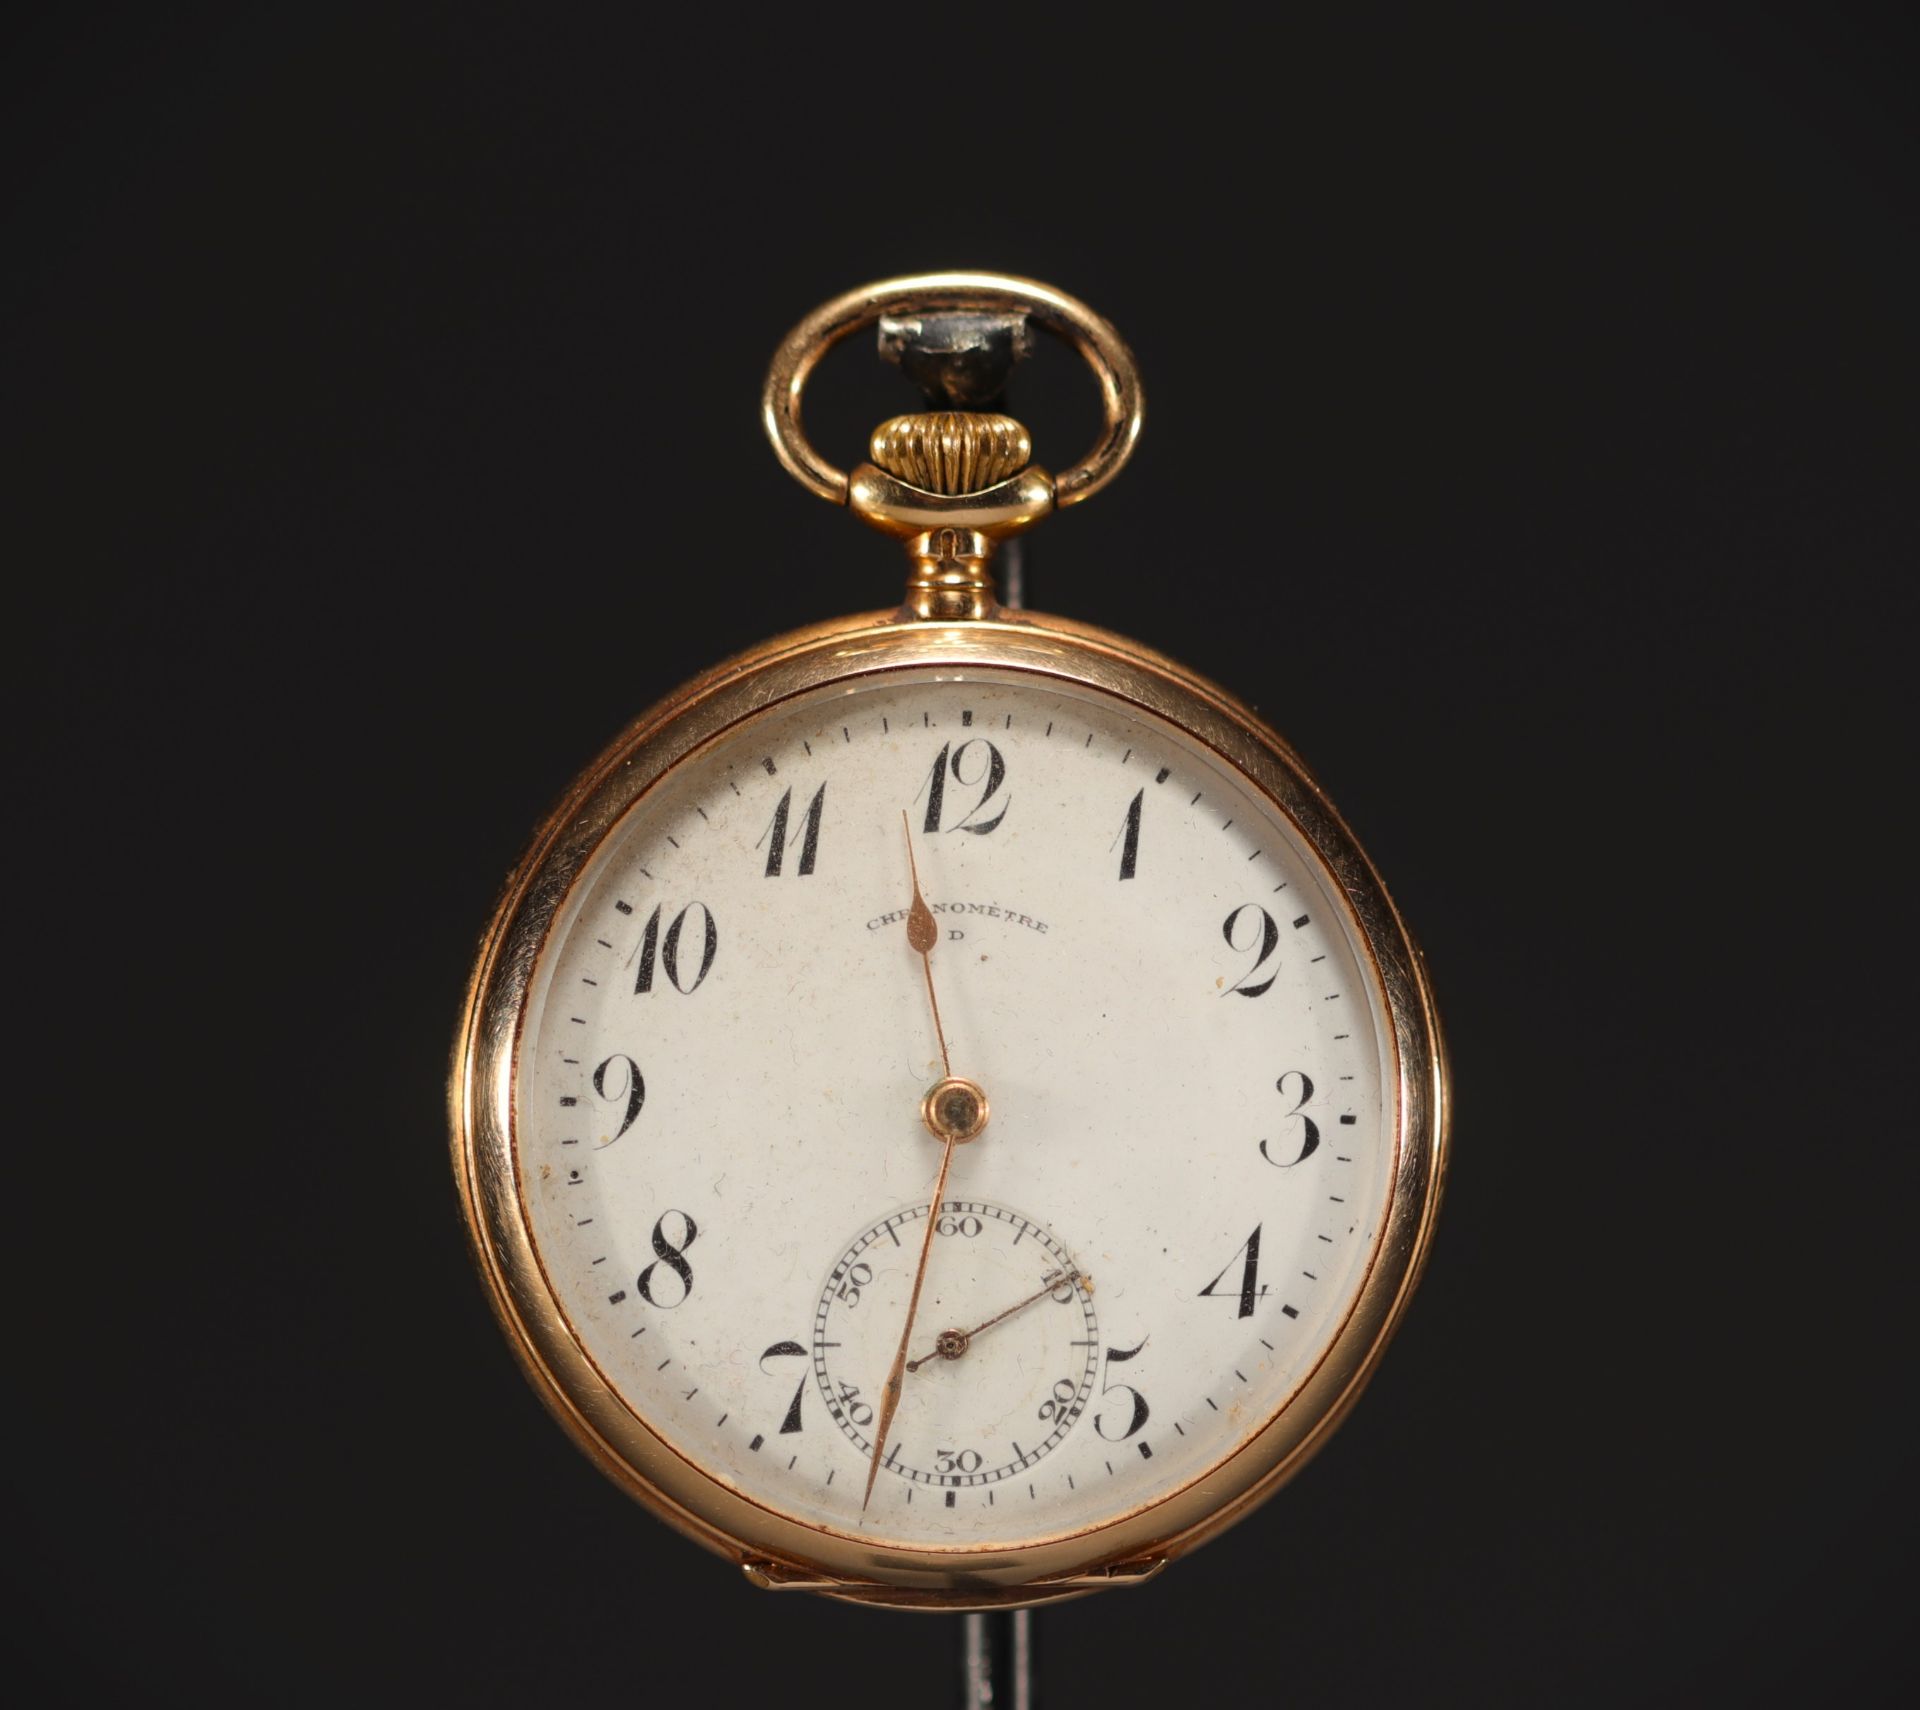 Chronometre D" pocket watch in 18k gold, total weight 70.3 g. - Bild 2 aus 3